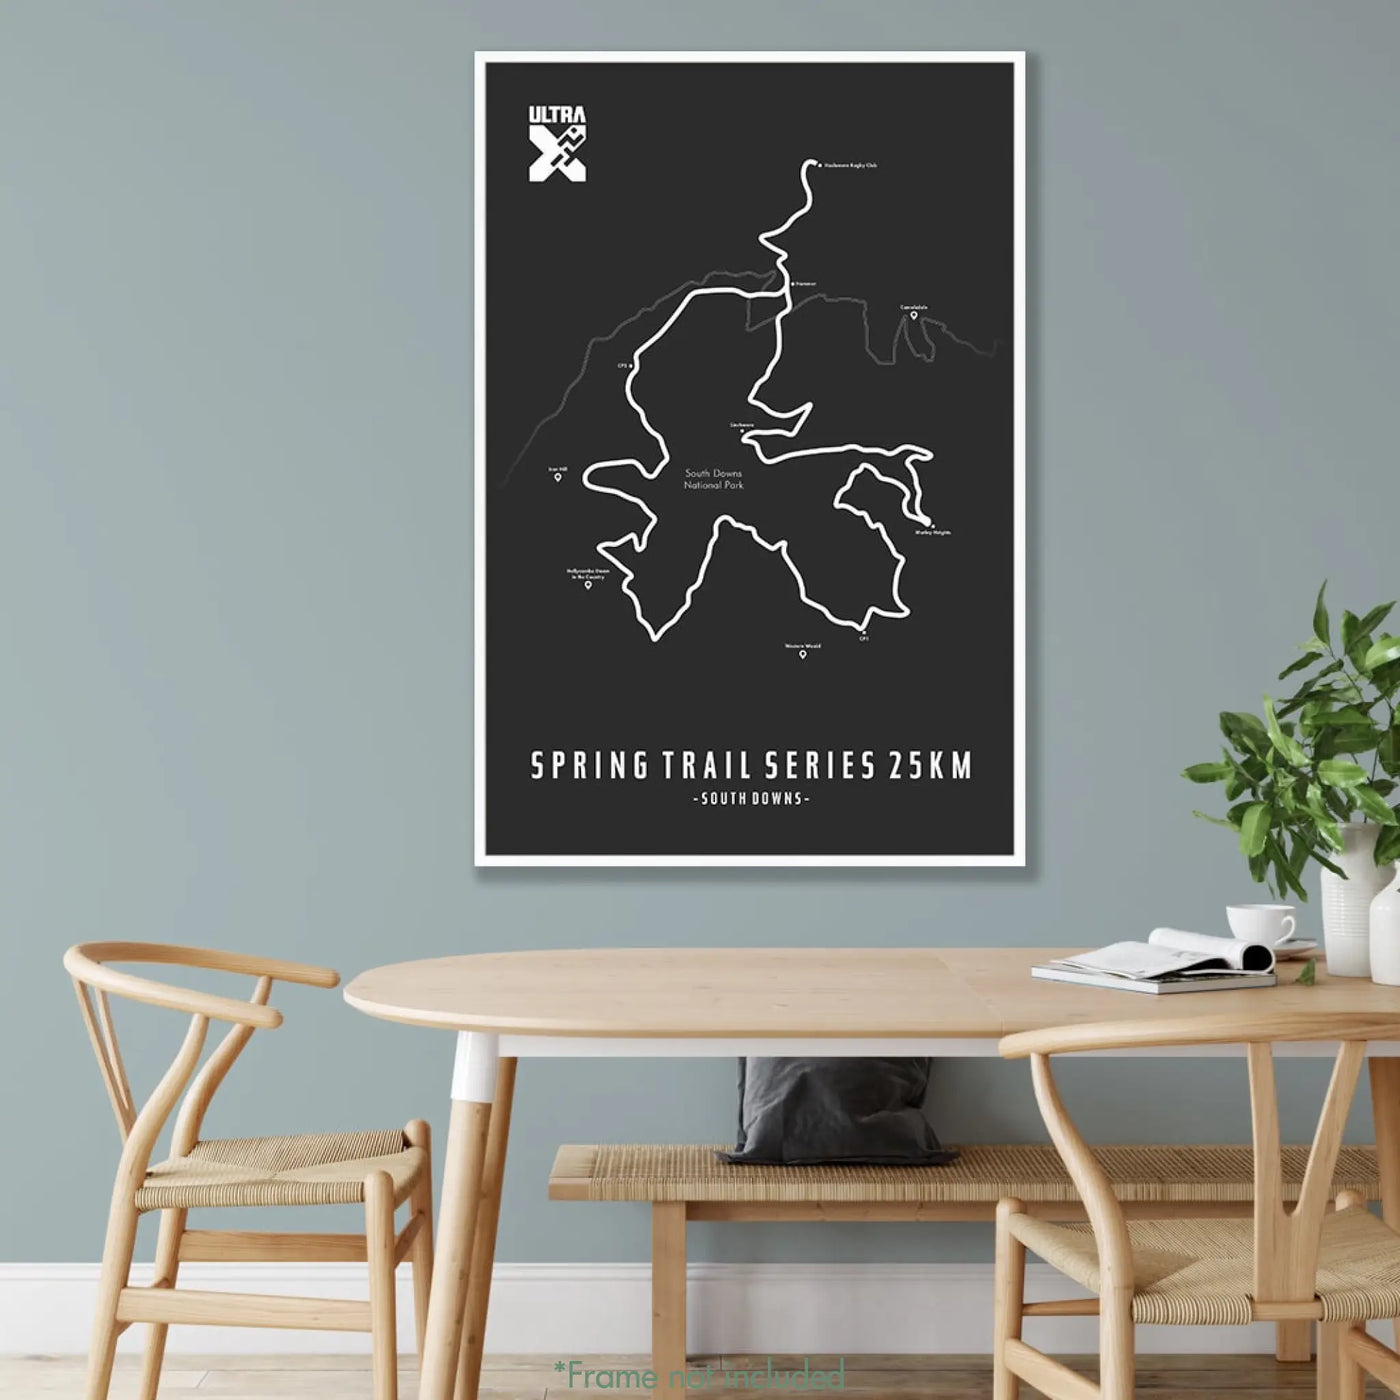 Trail Poster of Ultra X Spring Trail Series 25km - Grey Mockup